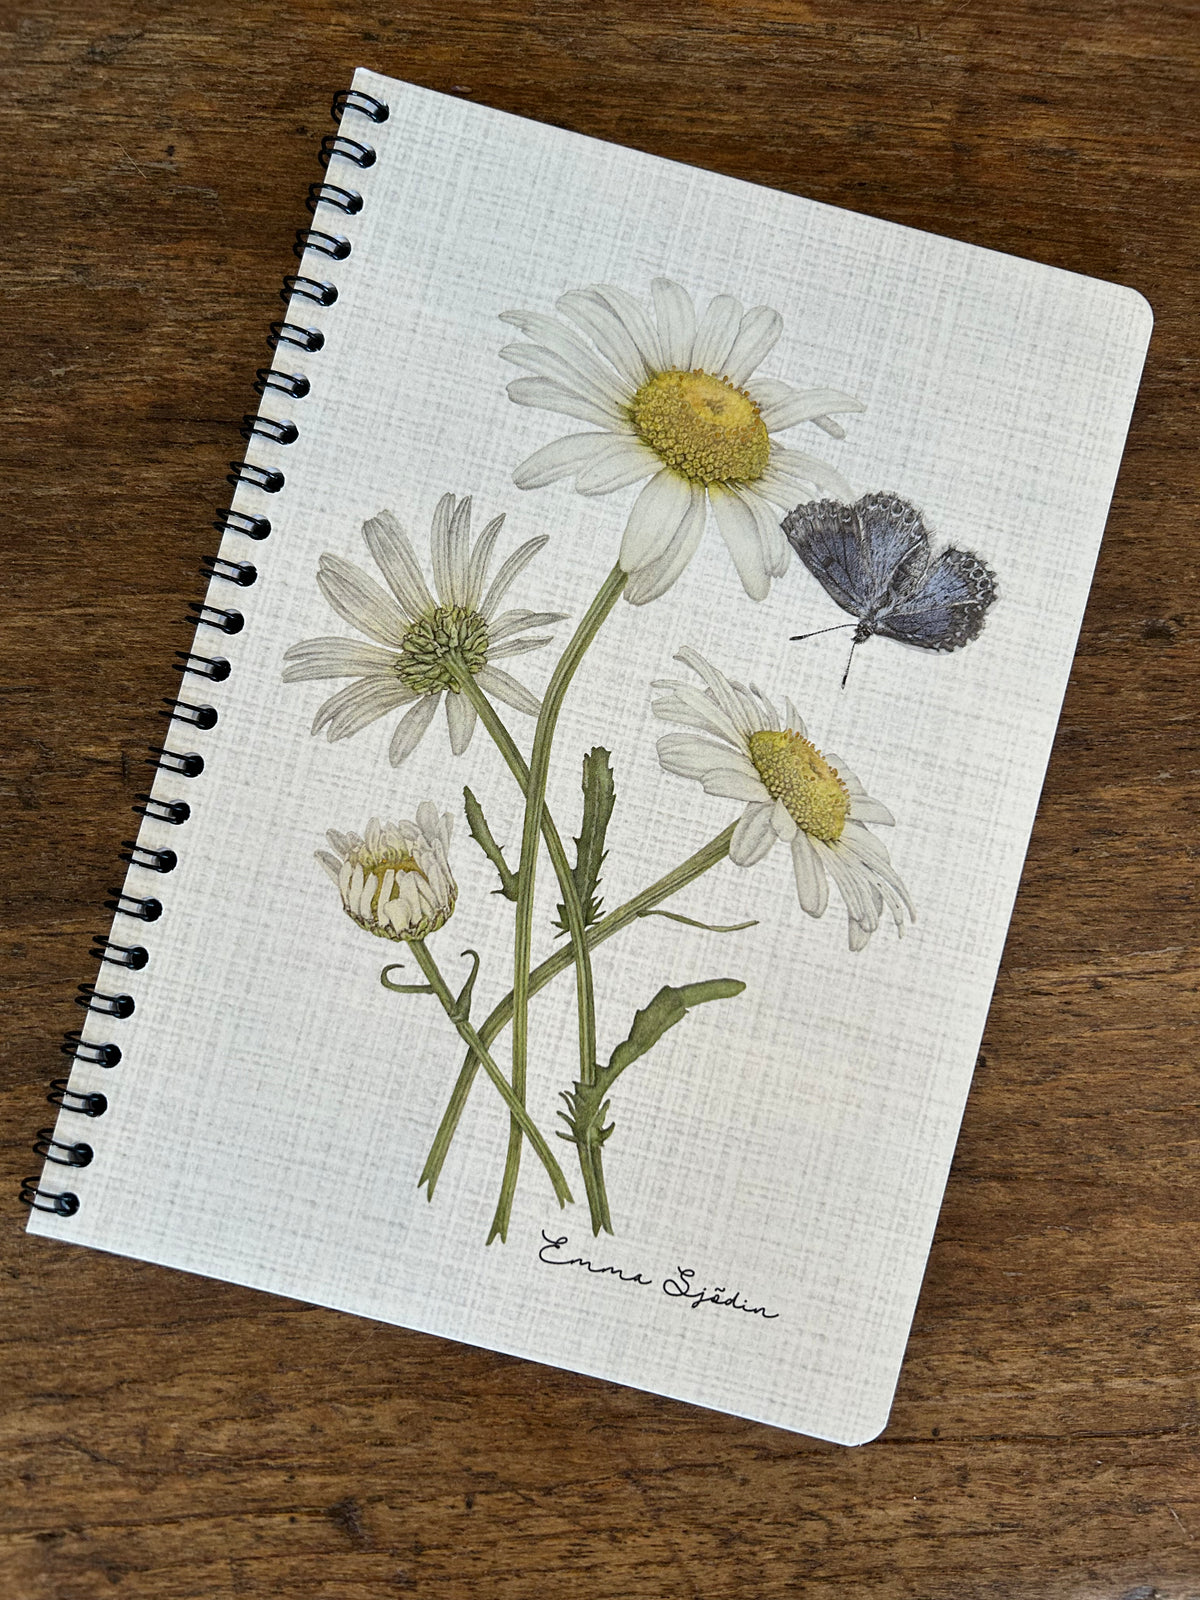 Emma Sjodin Notebook: Multiple Designs